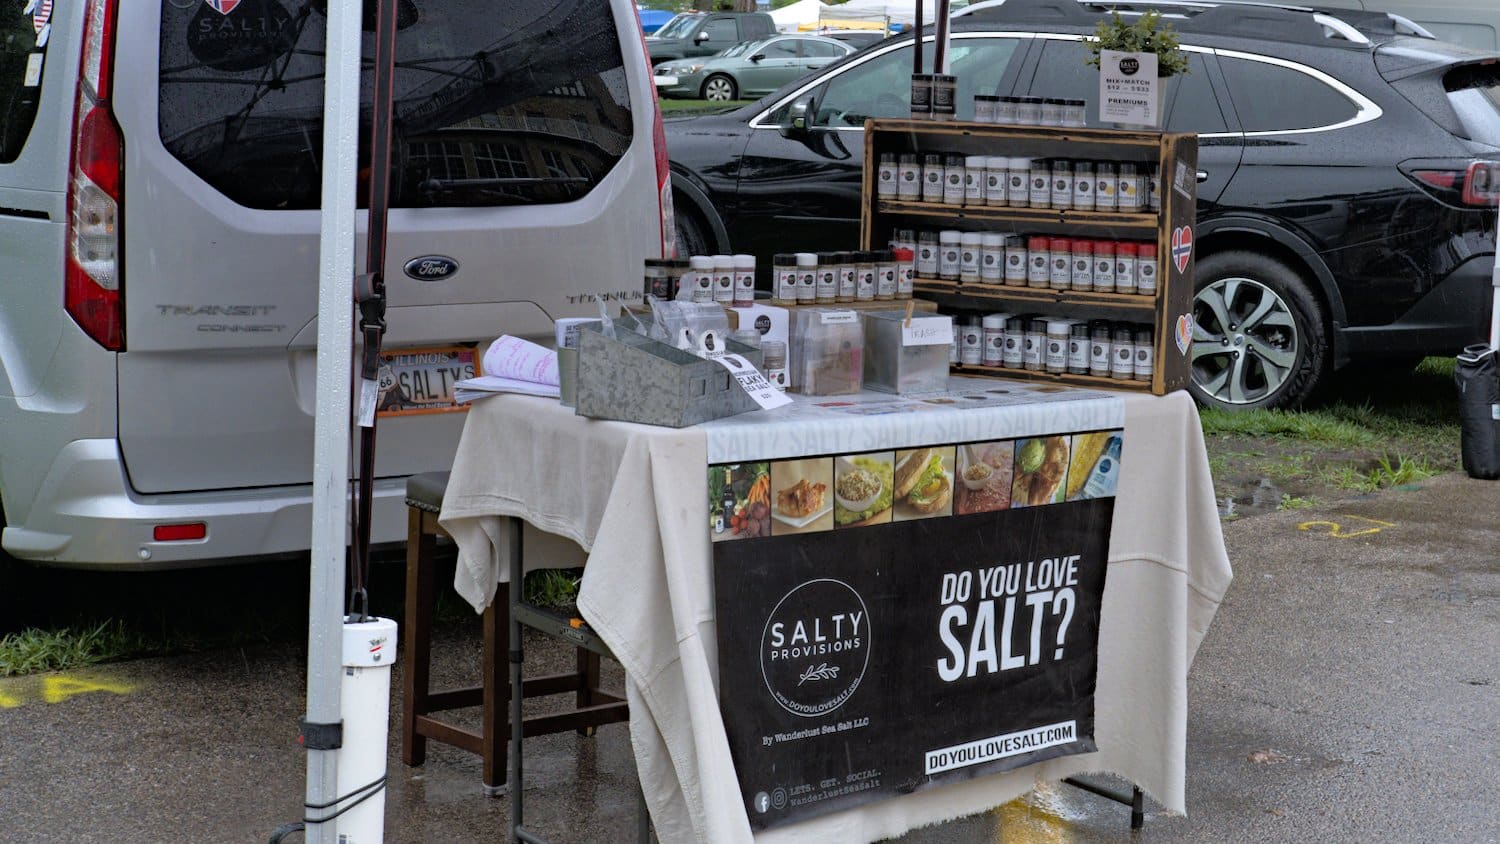 Salty Provisions Sea salts from Wanderlust Sea Salt LLC.